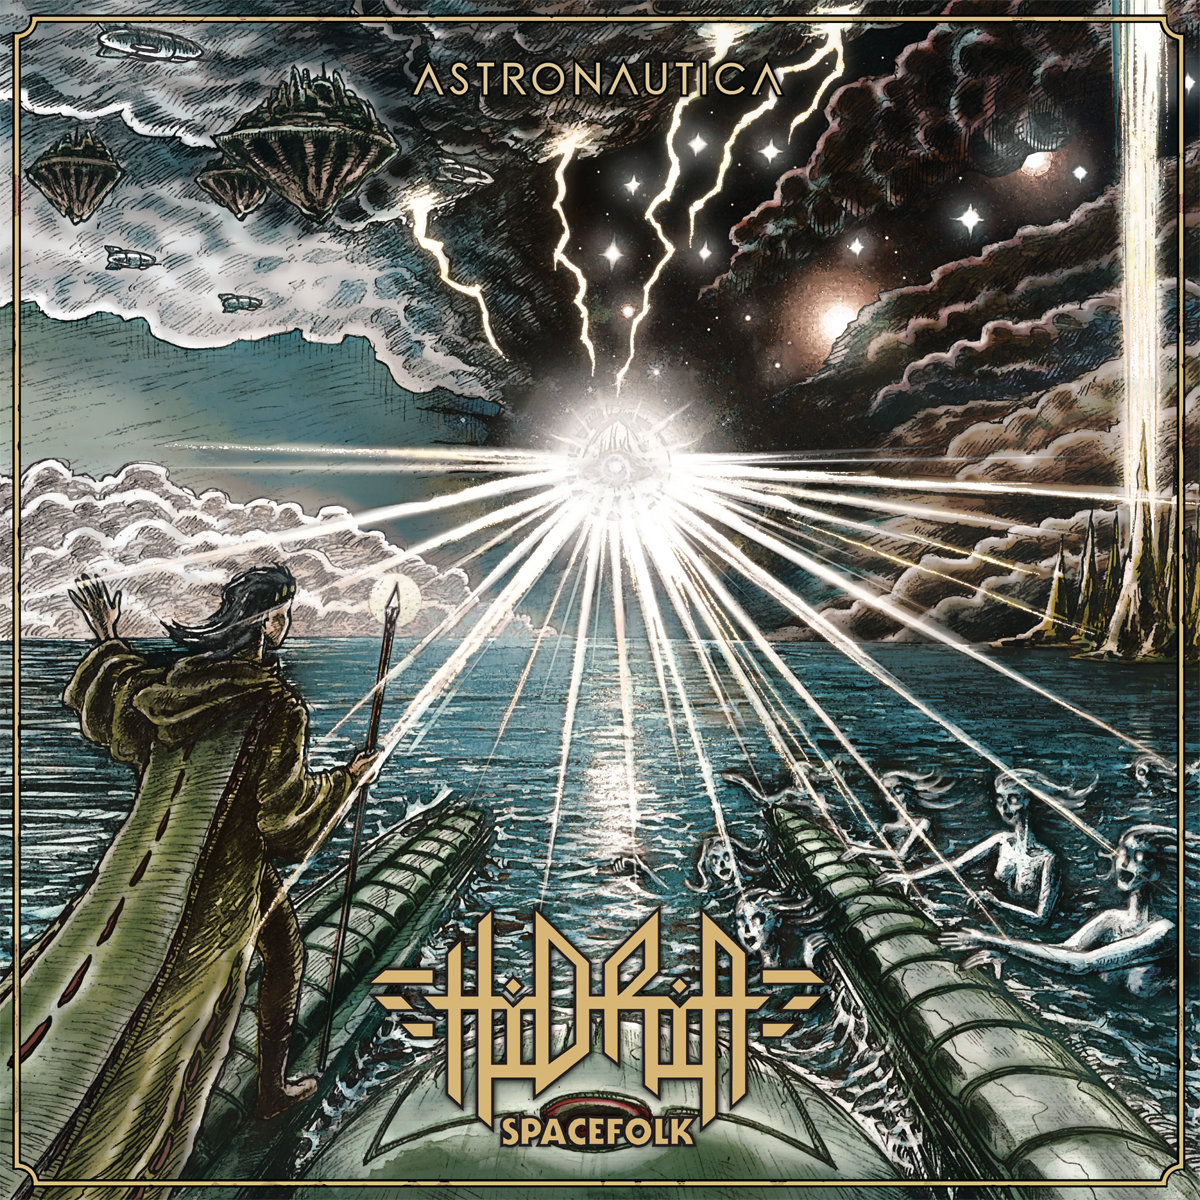 Hidria Spacefolk - Endymion @ 'Astronautica' album (alternative, astrobeat)